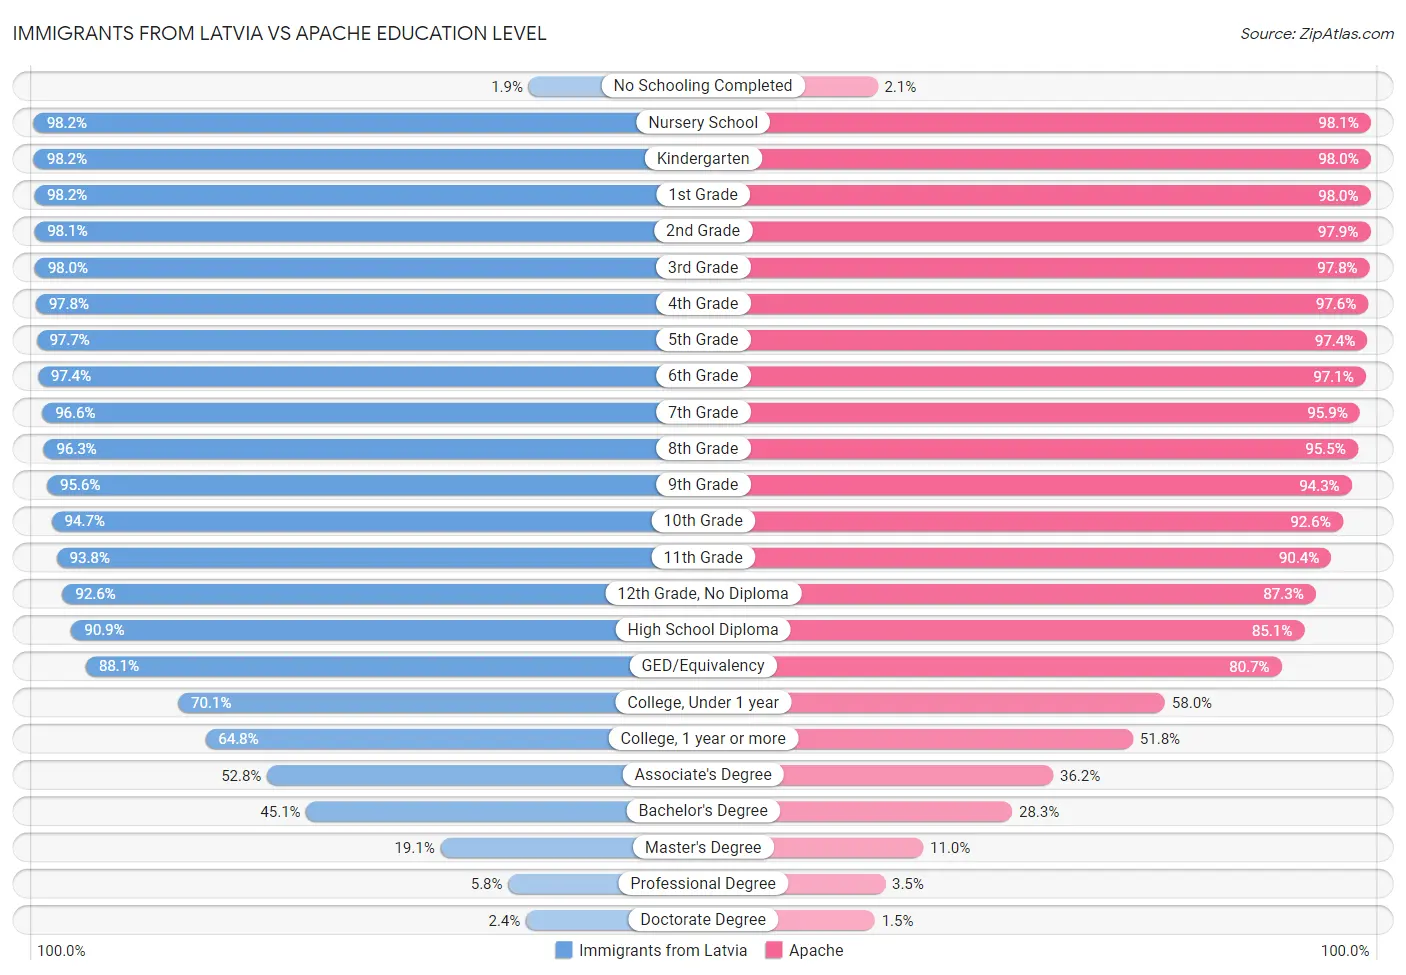 Immigrants from Latvia vs Apache Education Level